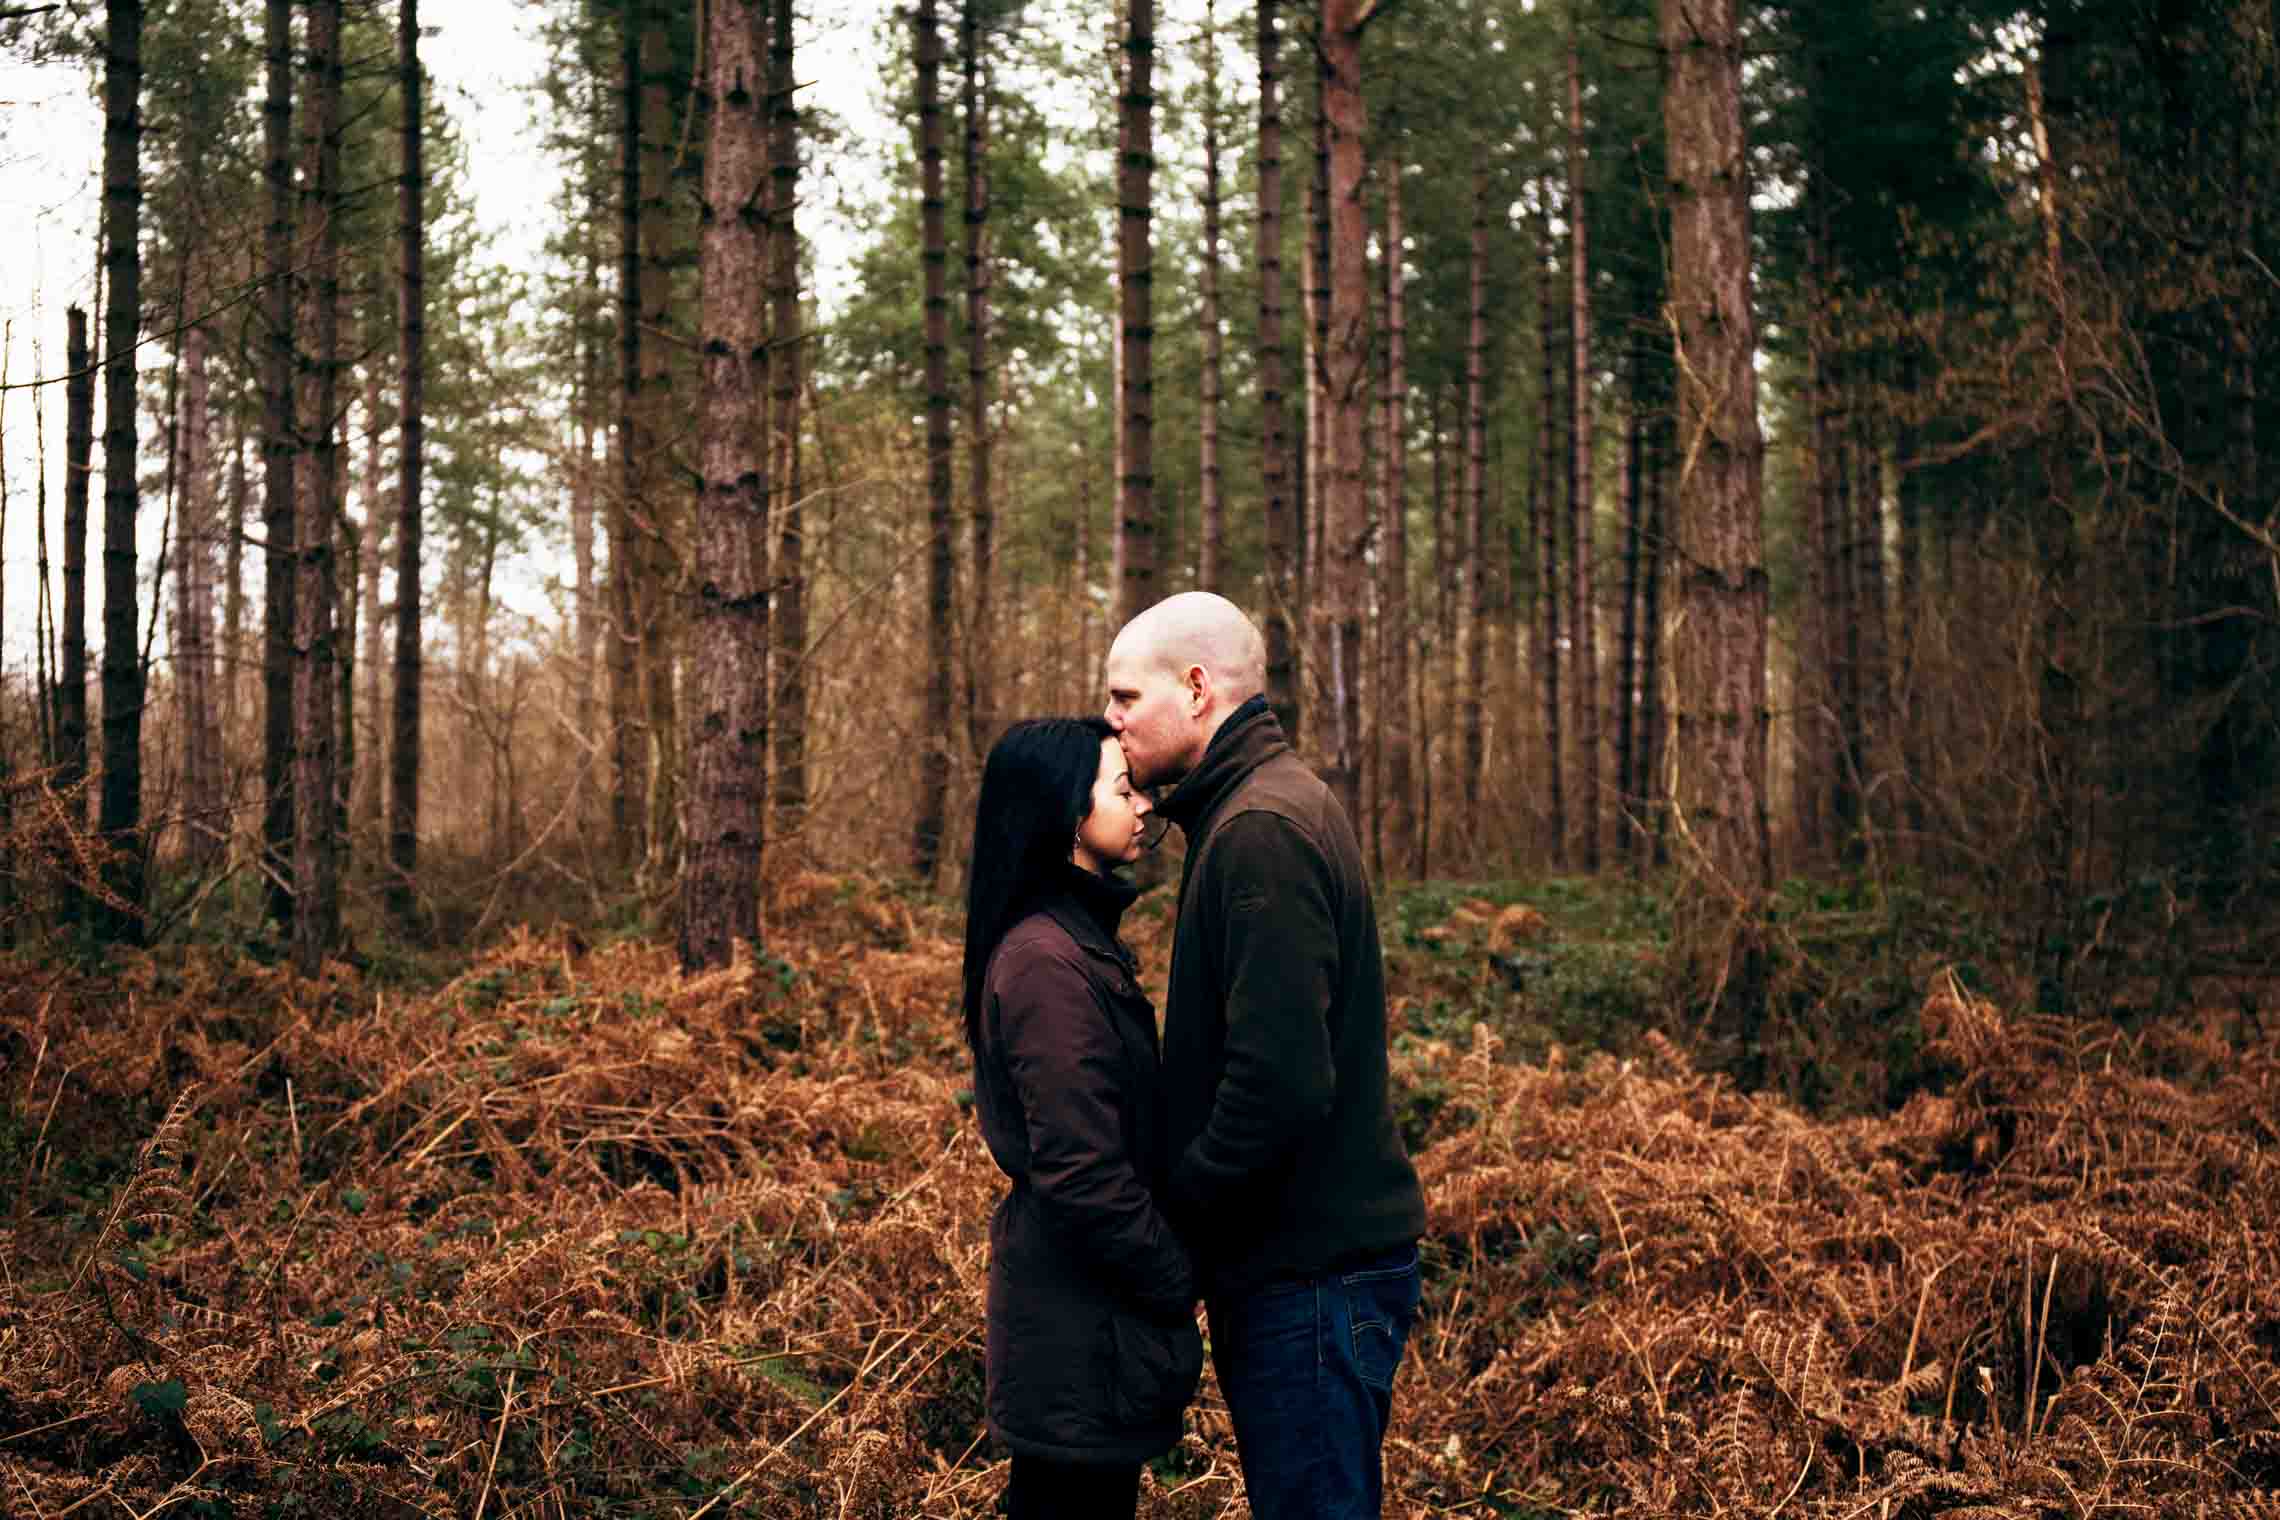 norfolk woodland couples engagement photography shoot